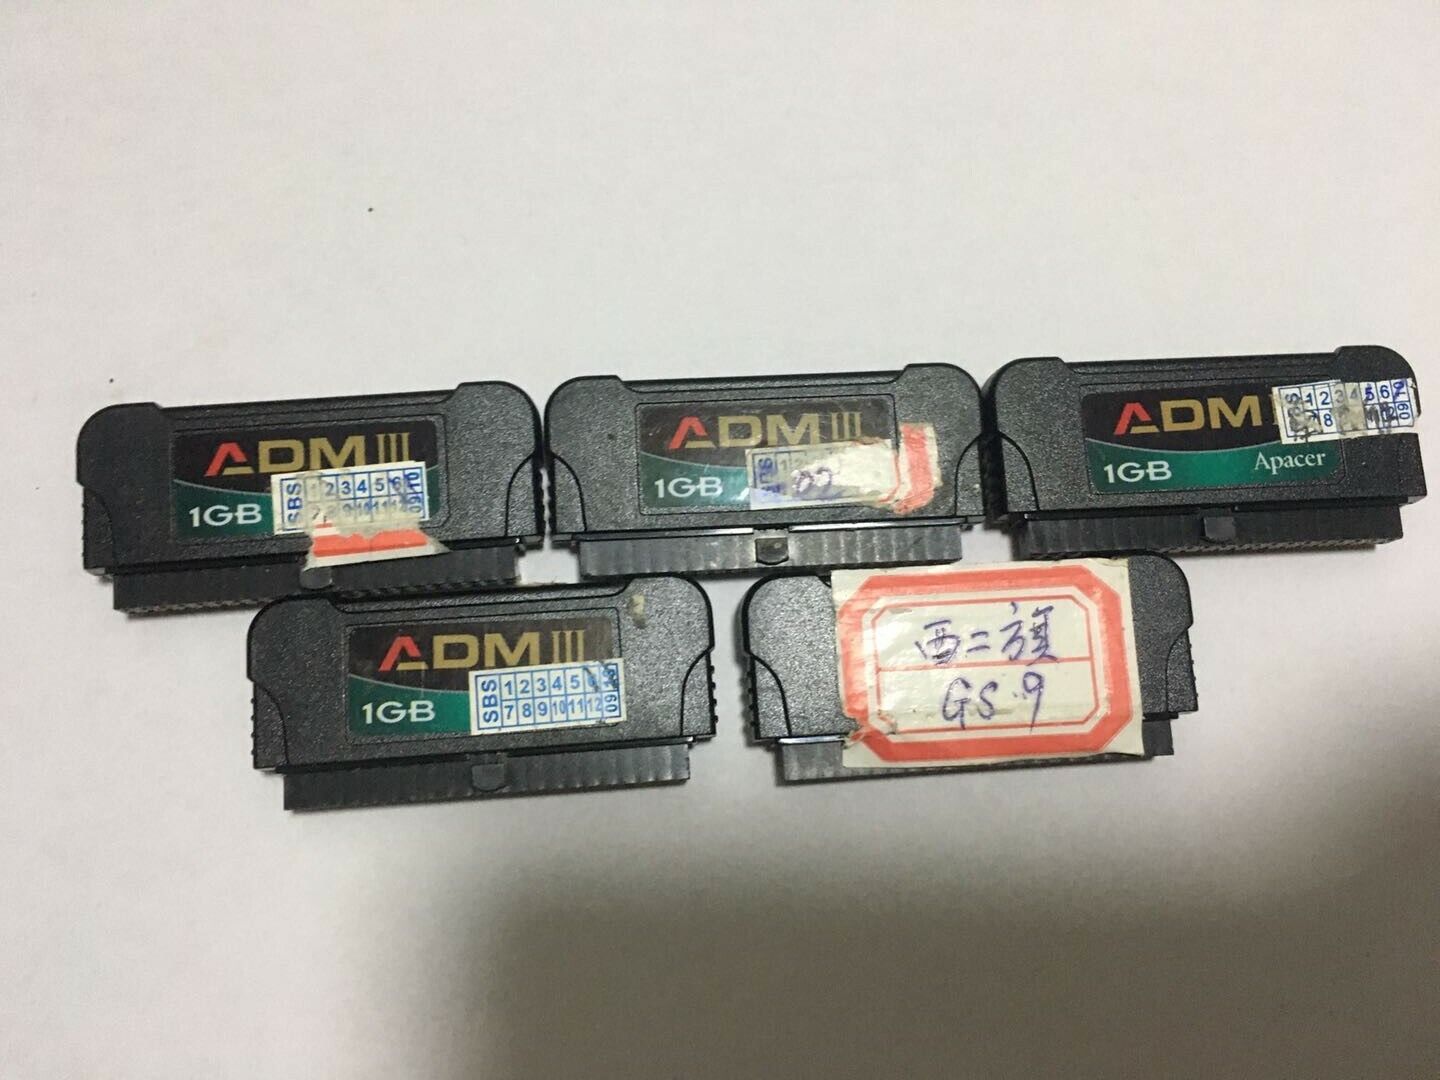 5PCS  Apacer 1GB 44-Pin ADM III DOM Disk On Module 44PIN PATA/IDE/EIDE